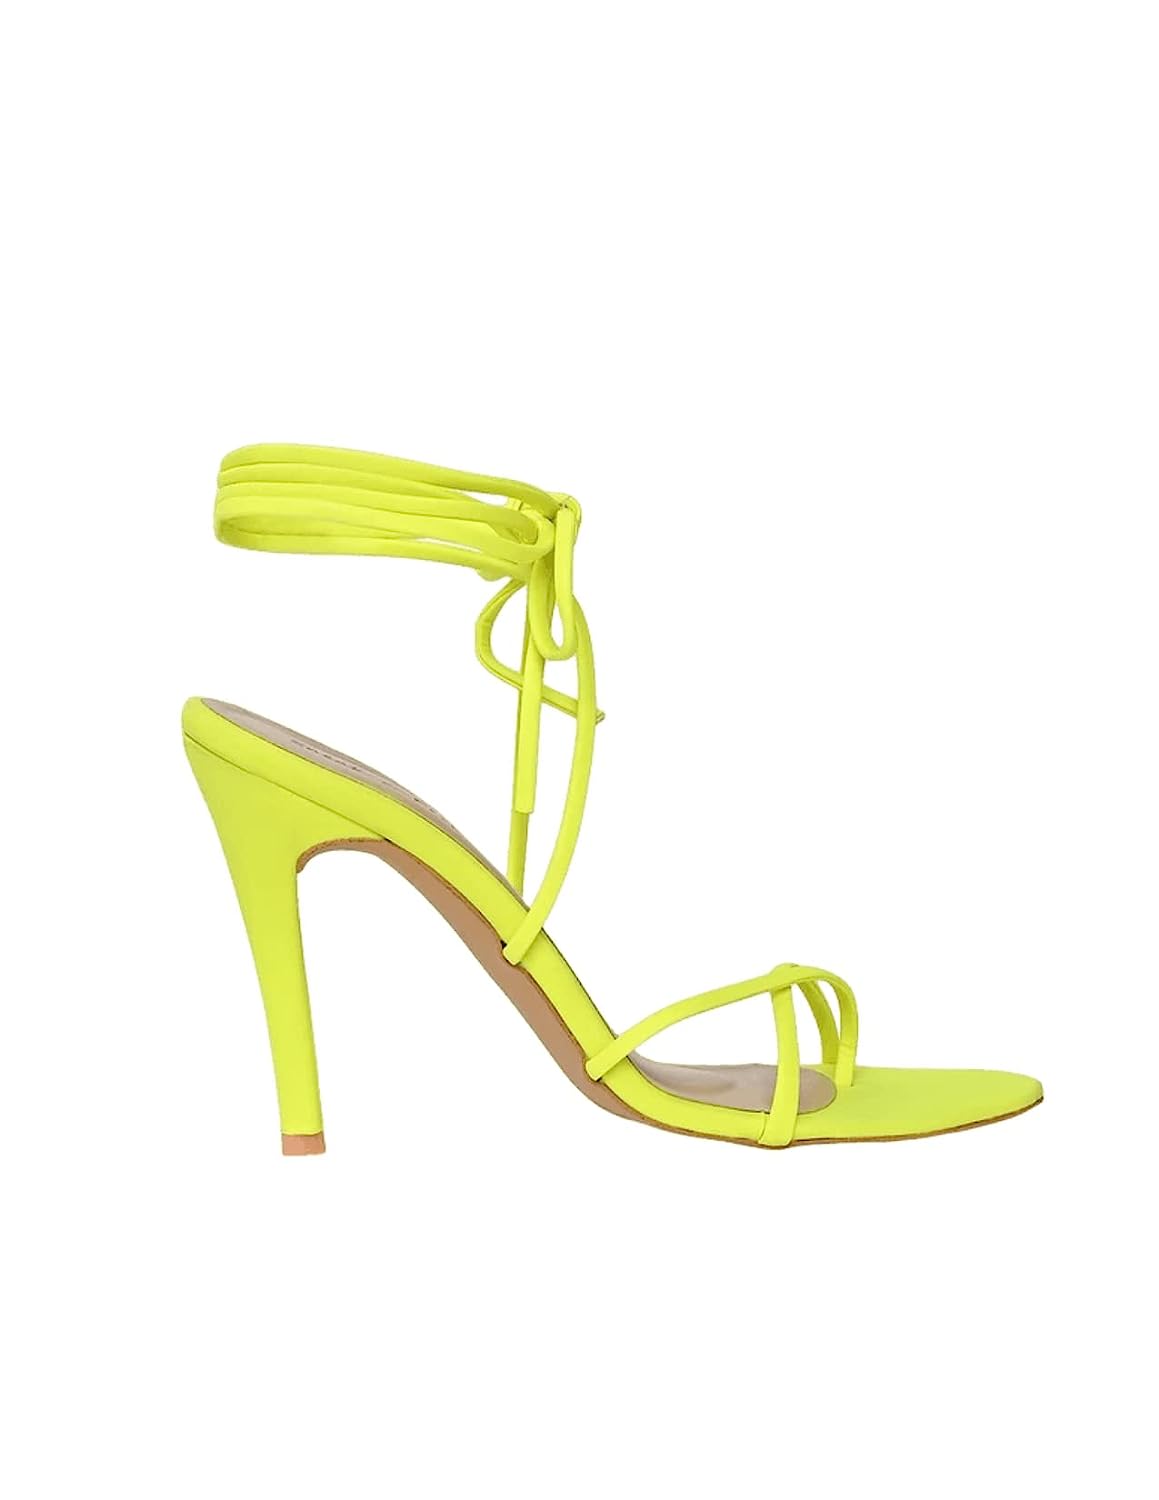 Latest Women Heels For Women |Neon Color Pencil High Heel | Latest Fancy  Sandal For Women| Latest Stylist Sandals For Ladies